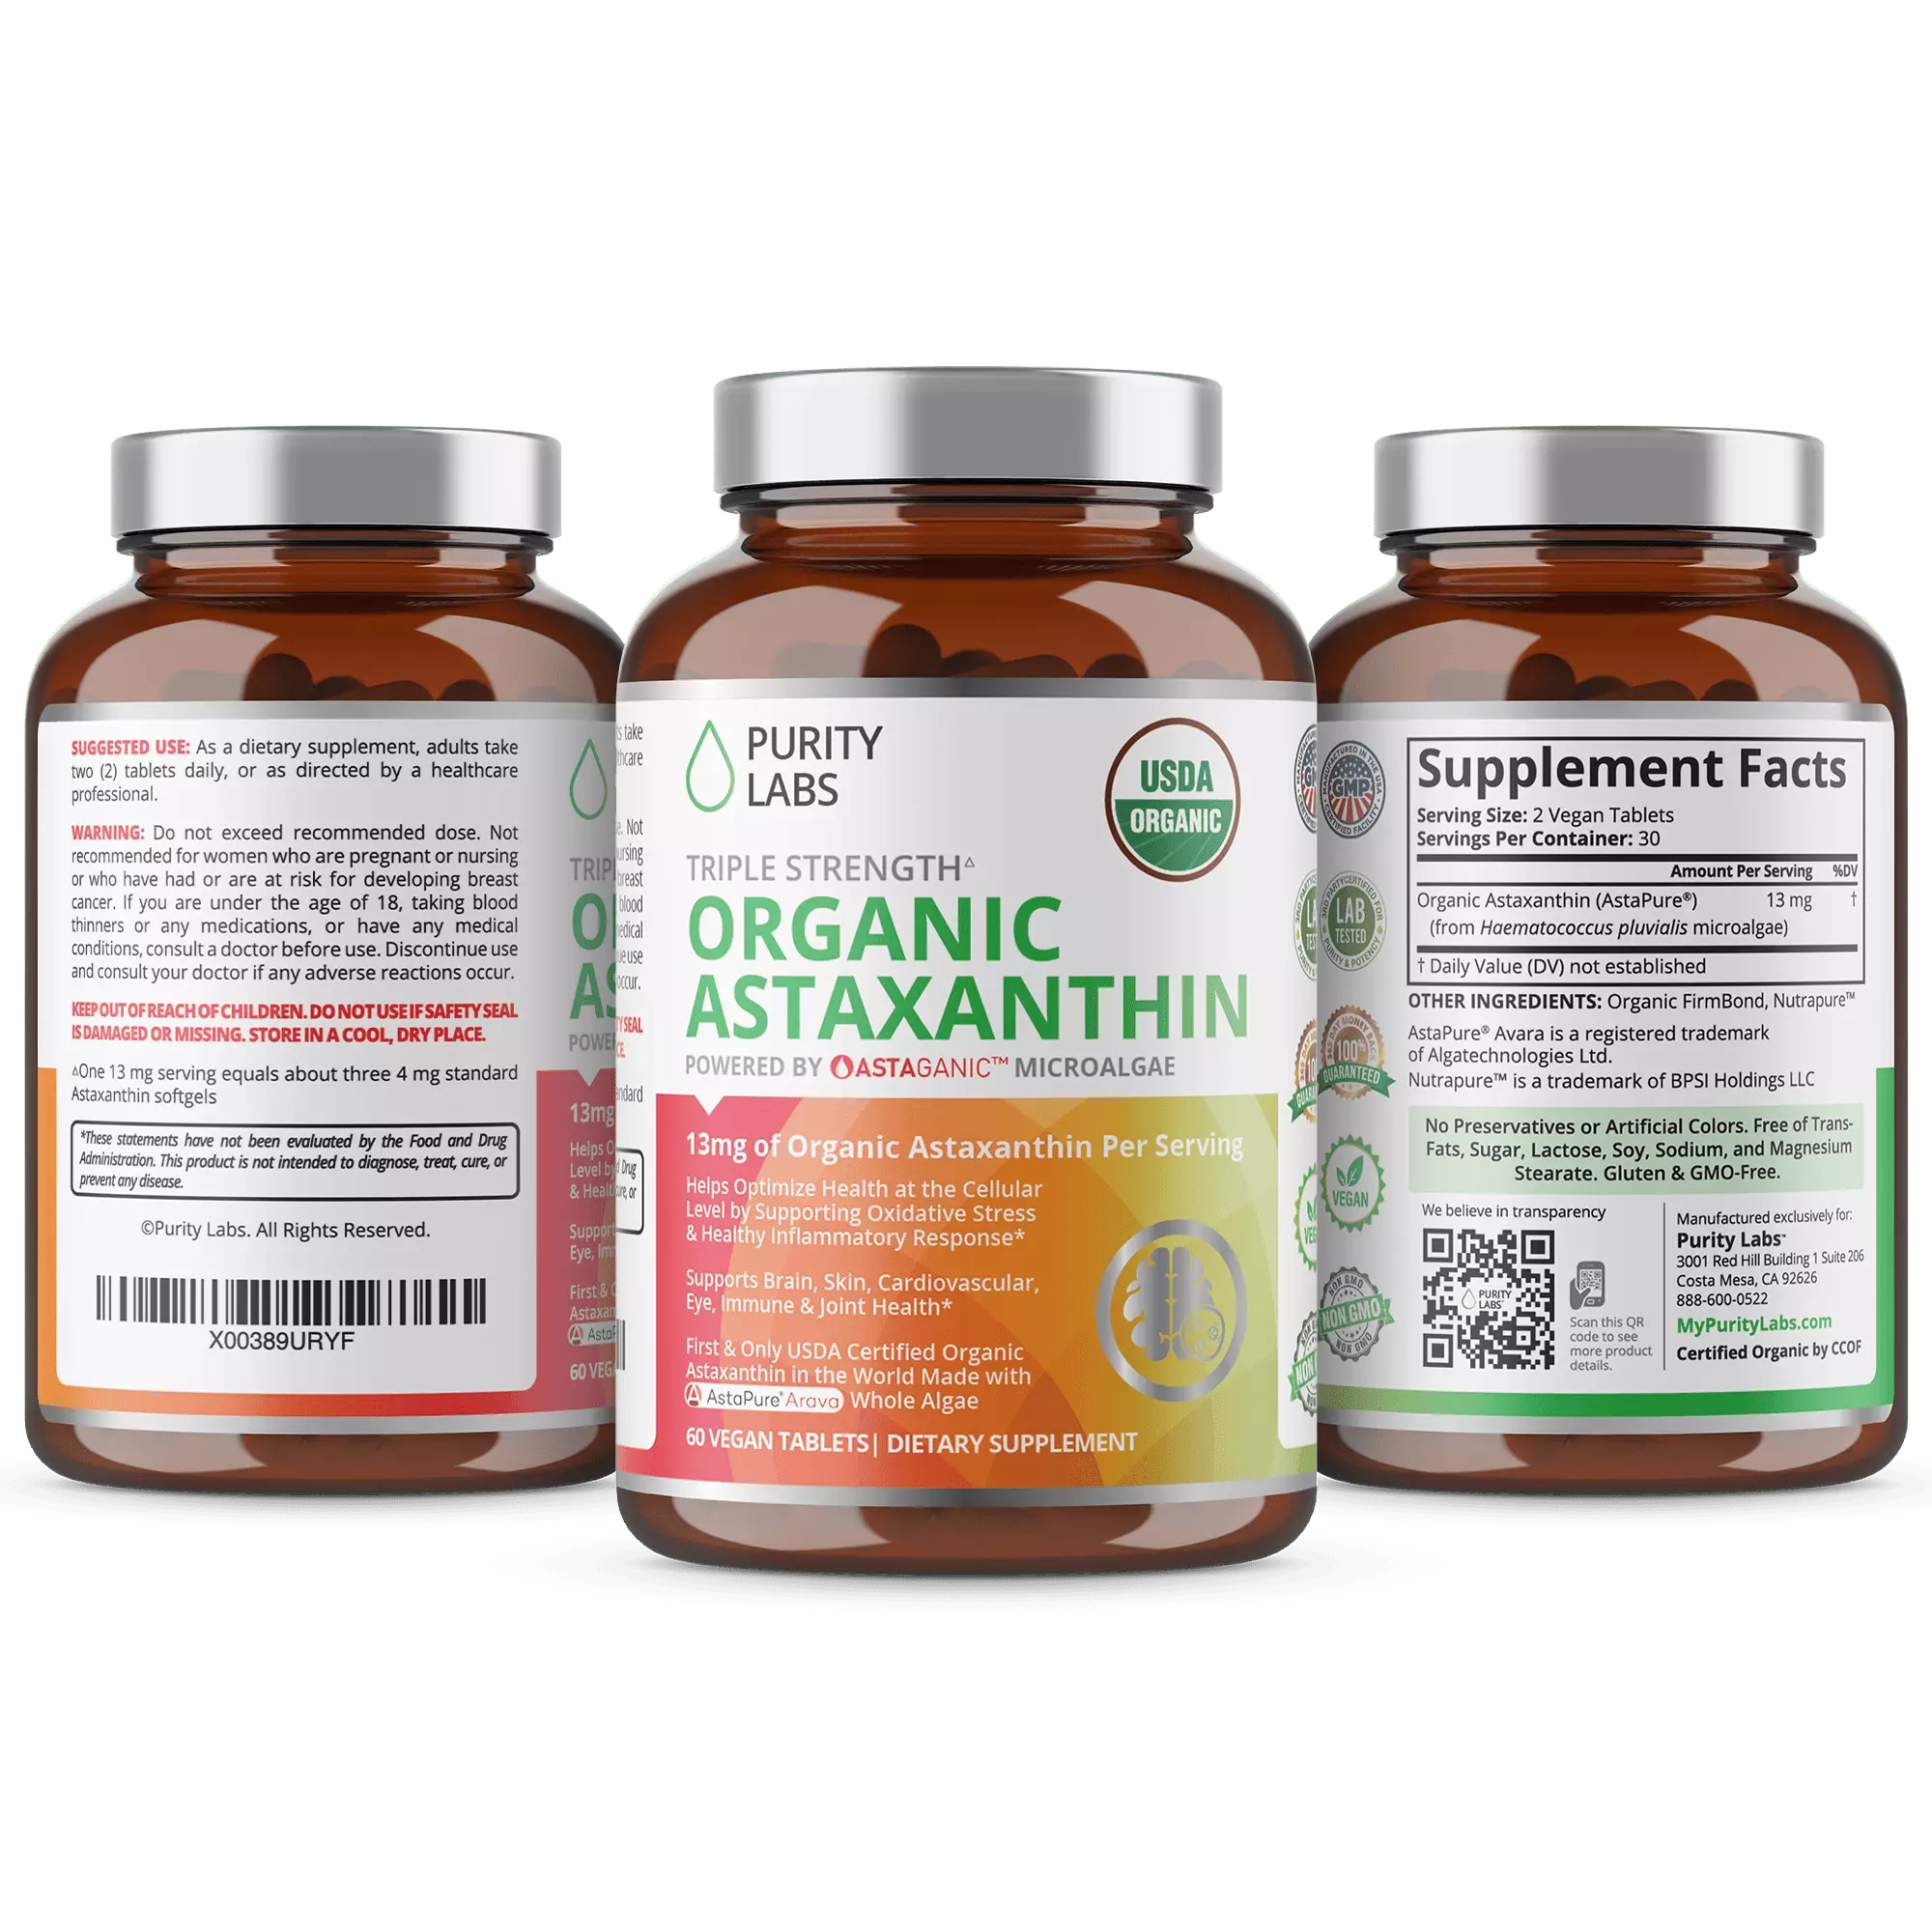 Organic AstaPure Astaxanthin - Triple Strength 13mg Per Serving